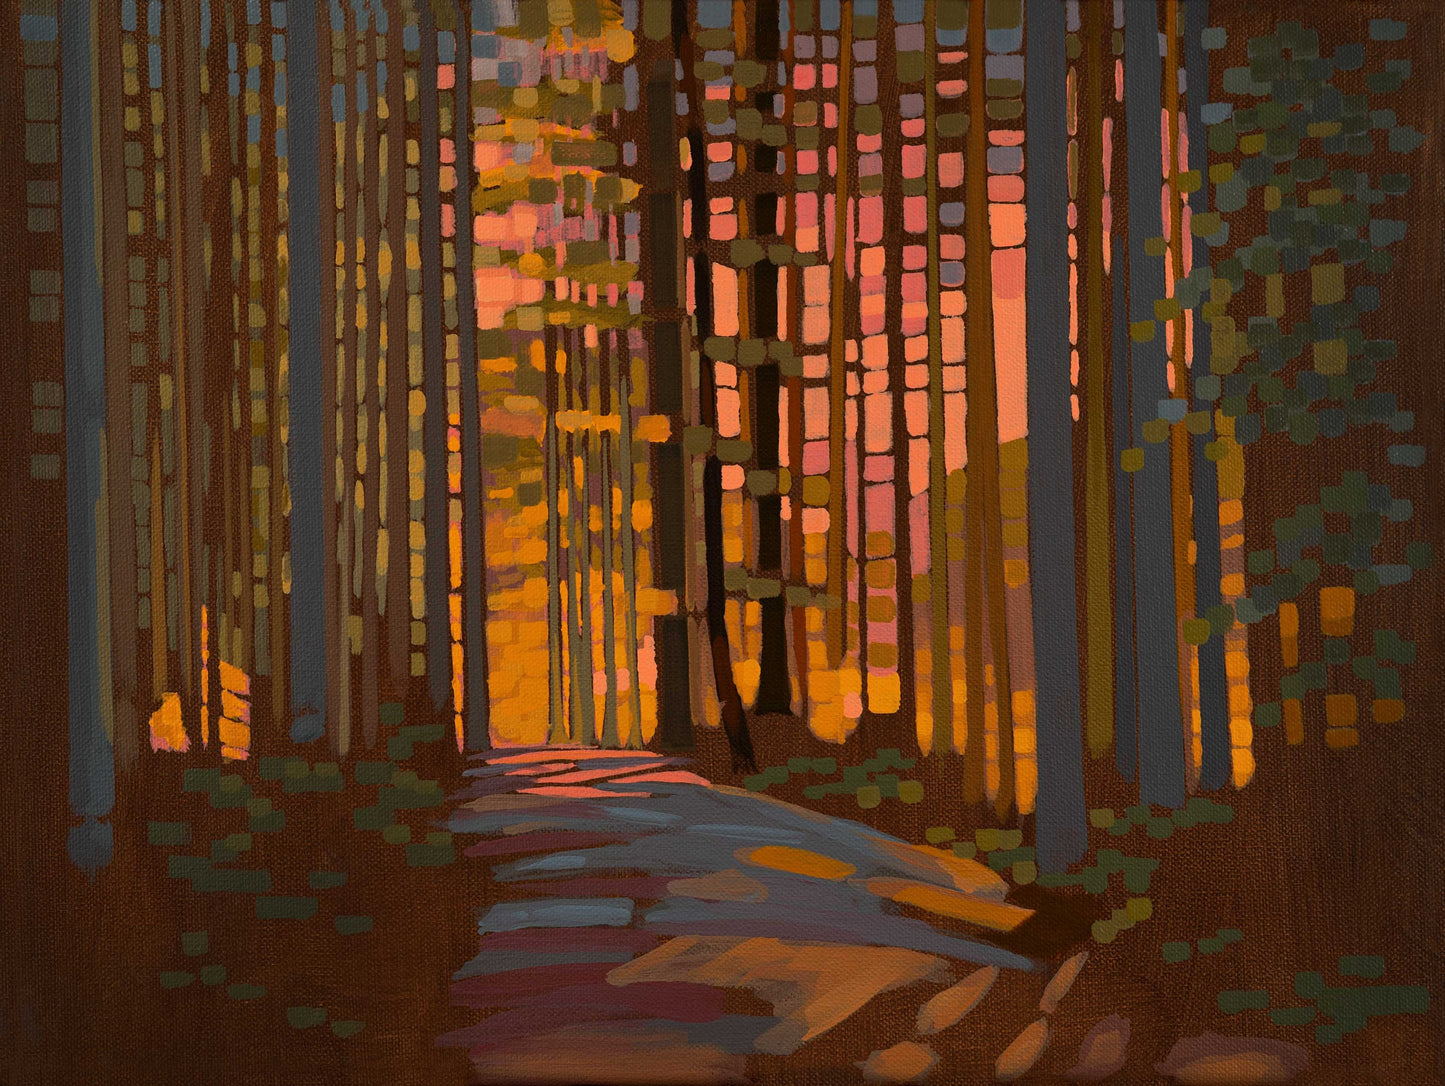 Luminous Forest Landscape Wall Art Canvas Print